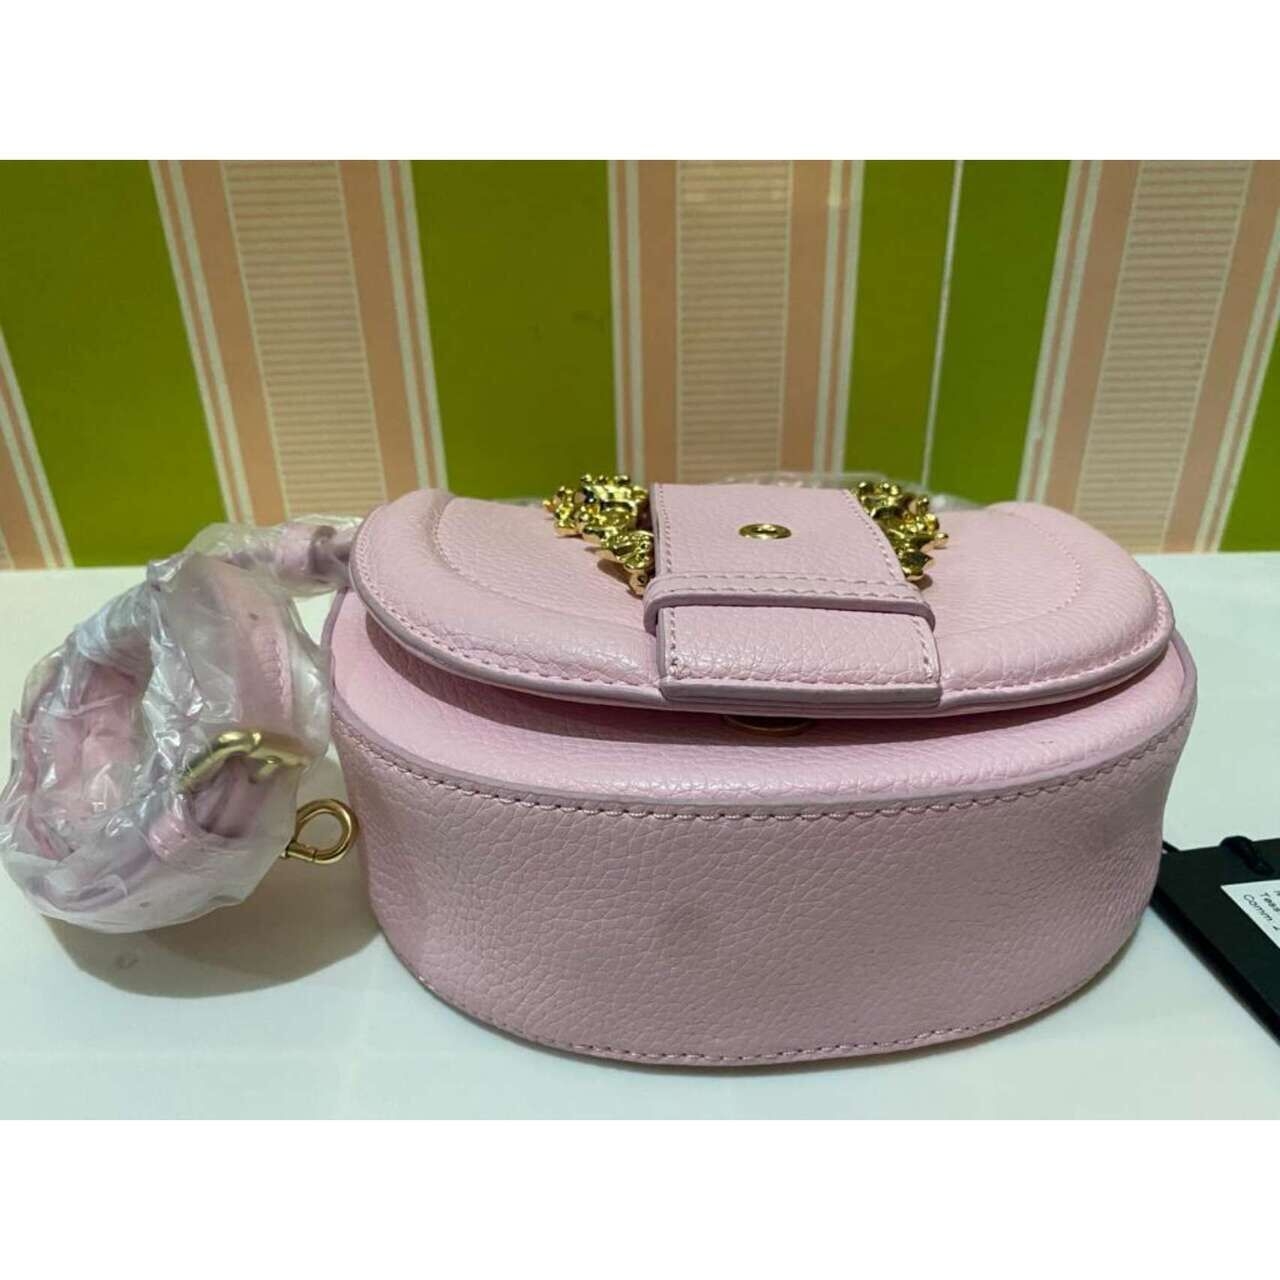 Versace Jeans Couture Pink Handbag